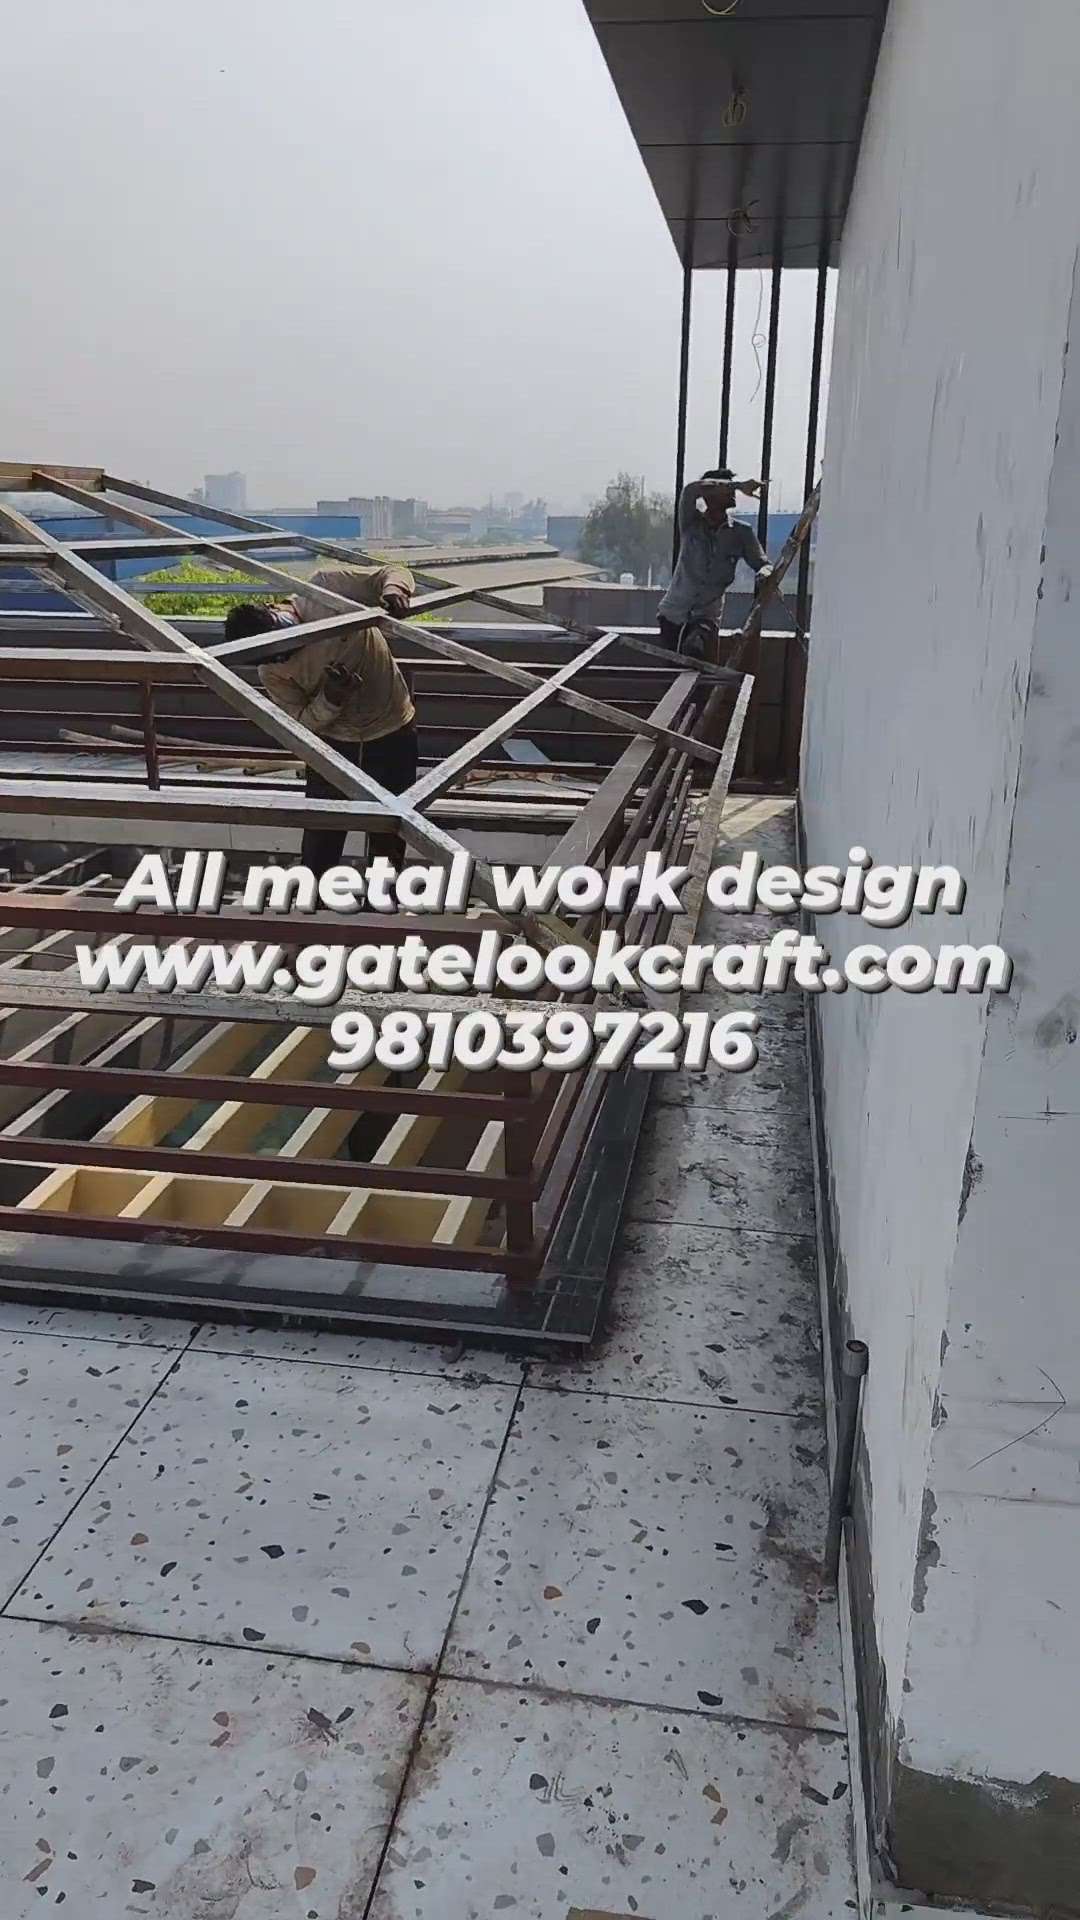 All metal design work by Hibza sterling interiors pvt ltd #gatelookcraft #canopydesign #hut #terrcegardan #pargola #aluminiumprofilegate #gates